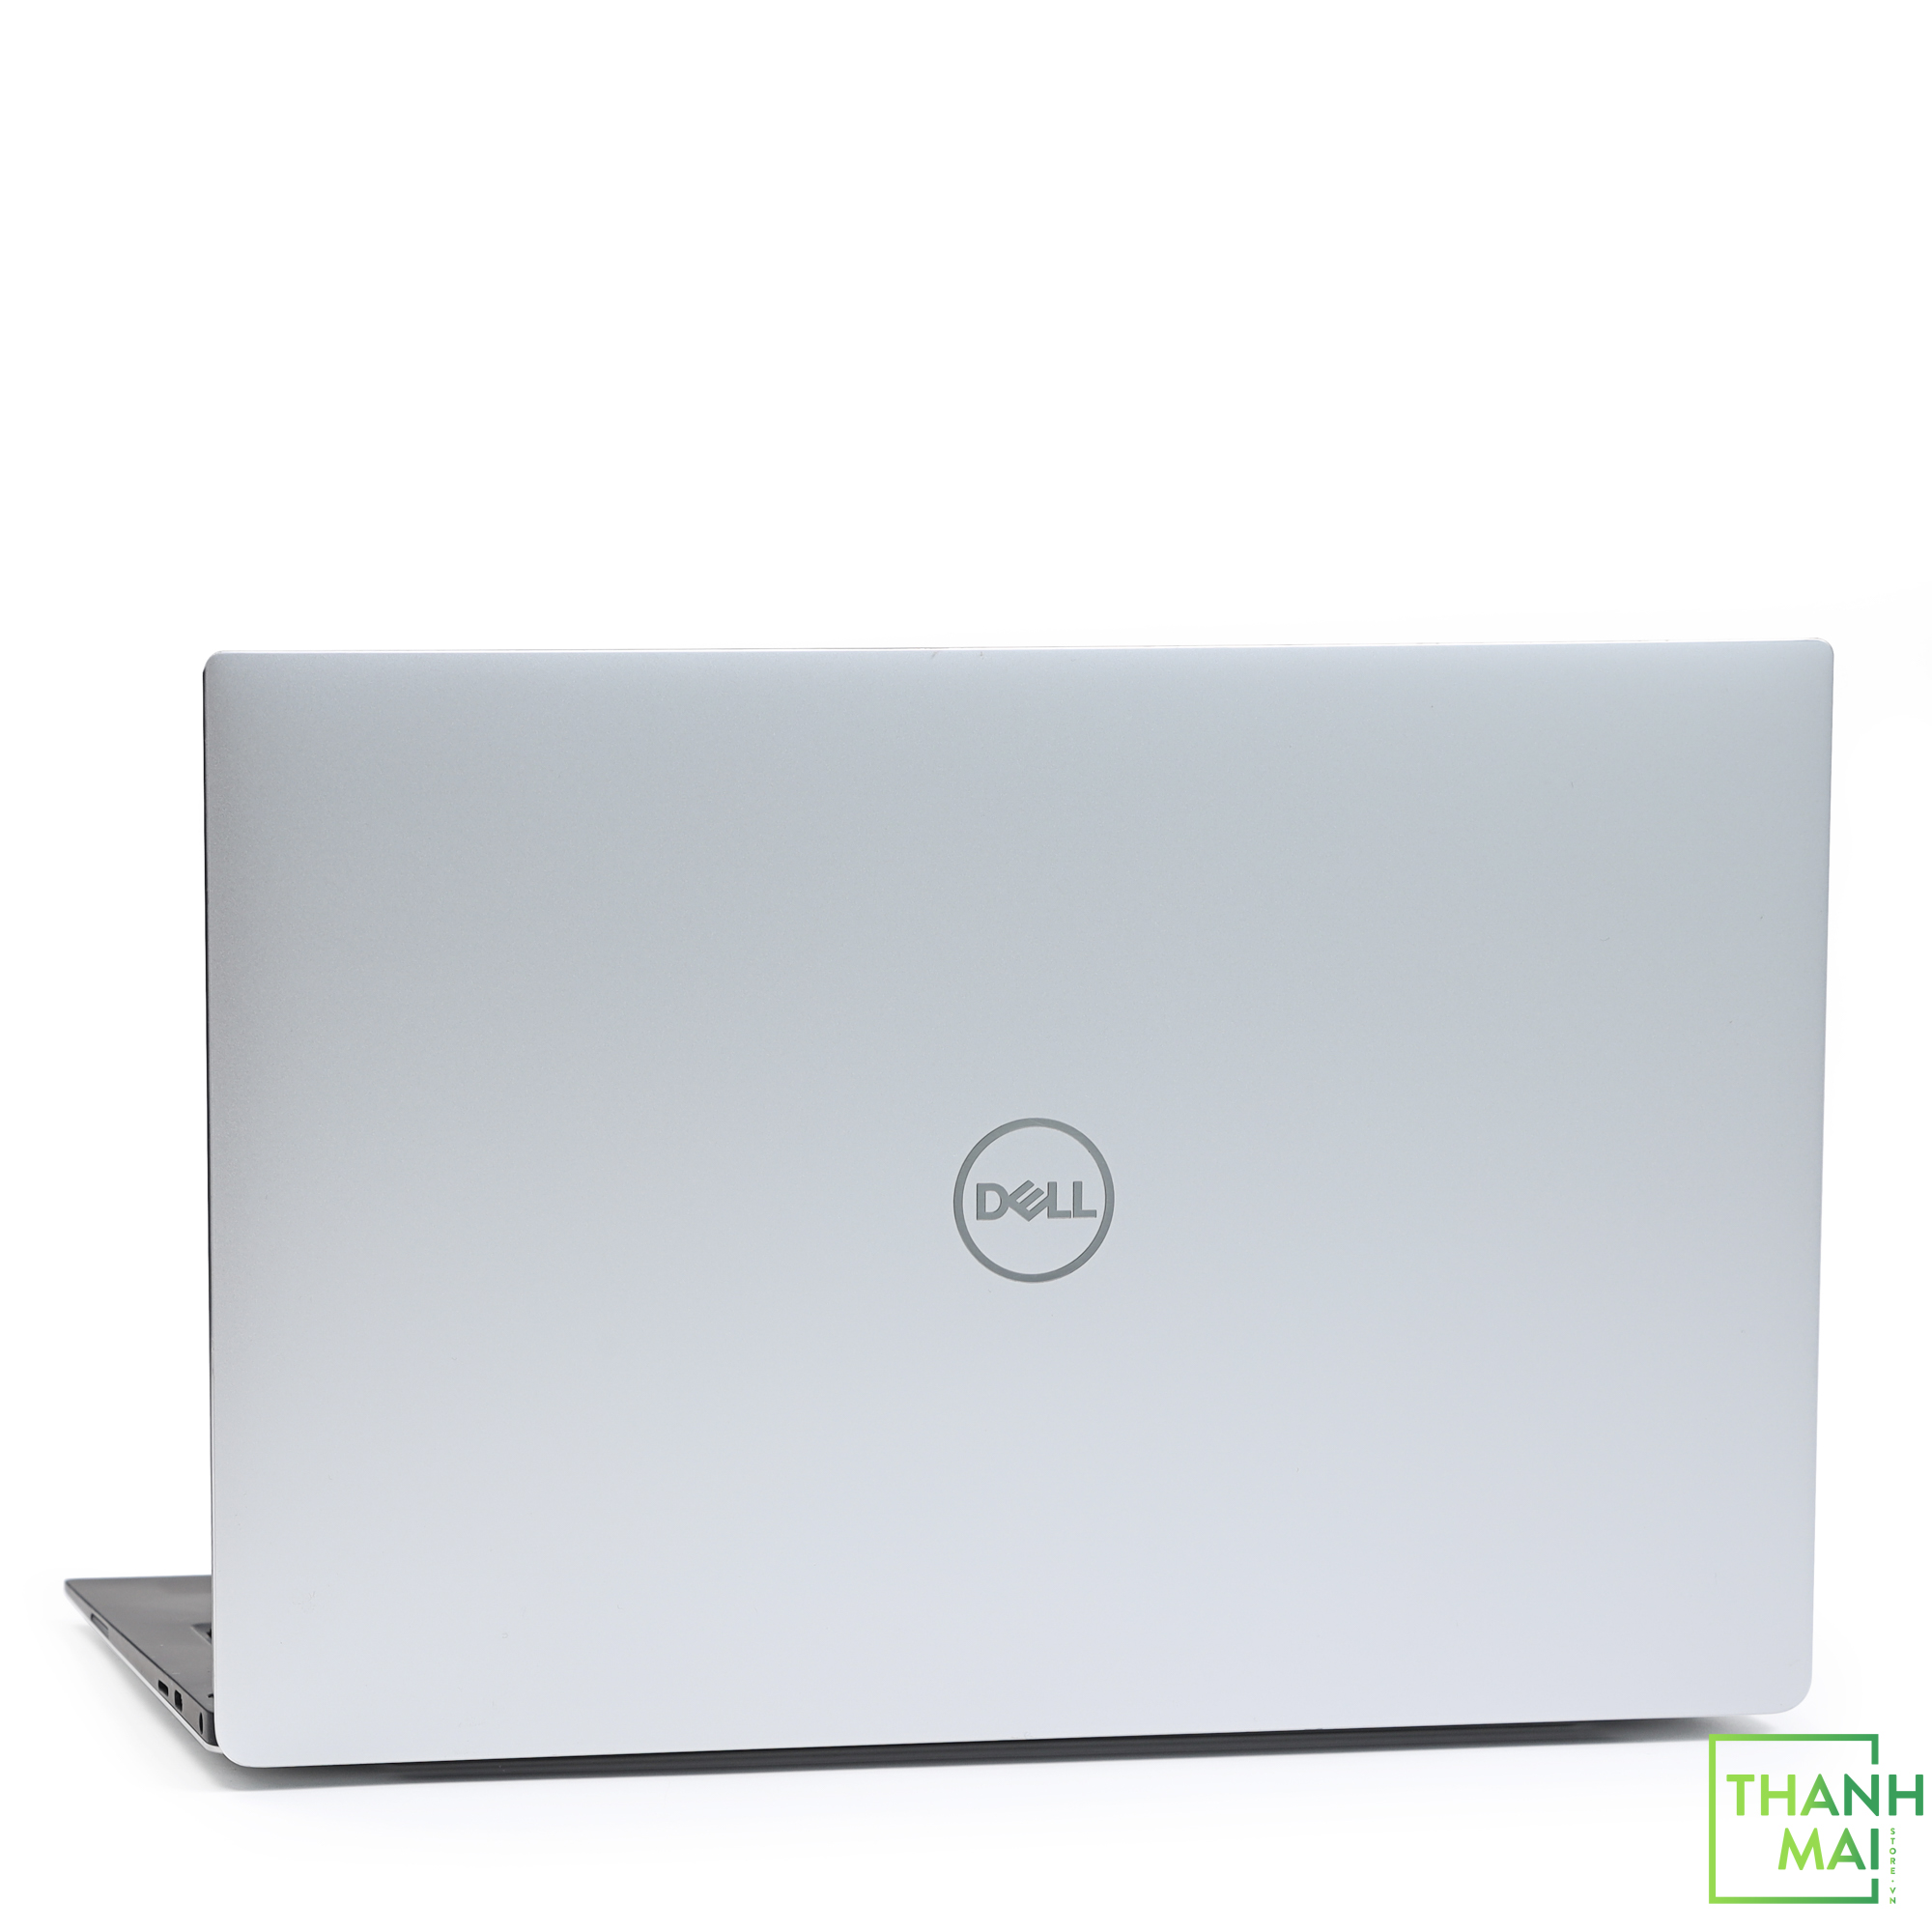 Laptop Dell Xps 13 7390 | Intel Core i7-10710U | Ram 16GB | 512GB SSD Pcie | 13.3" UHD 4K ( 3840 x 2160 ) IPS Touch screen | Win 10